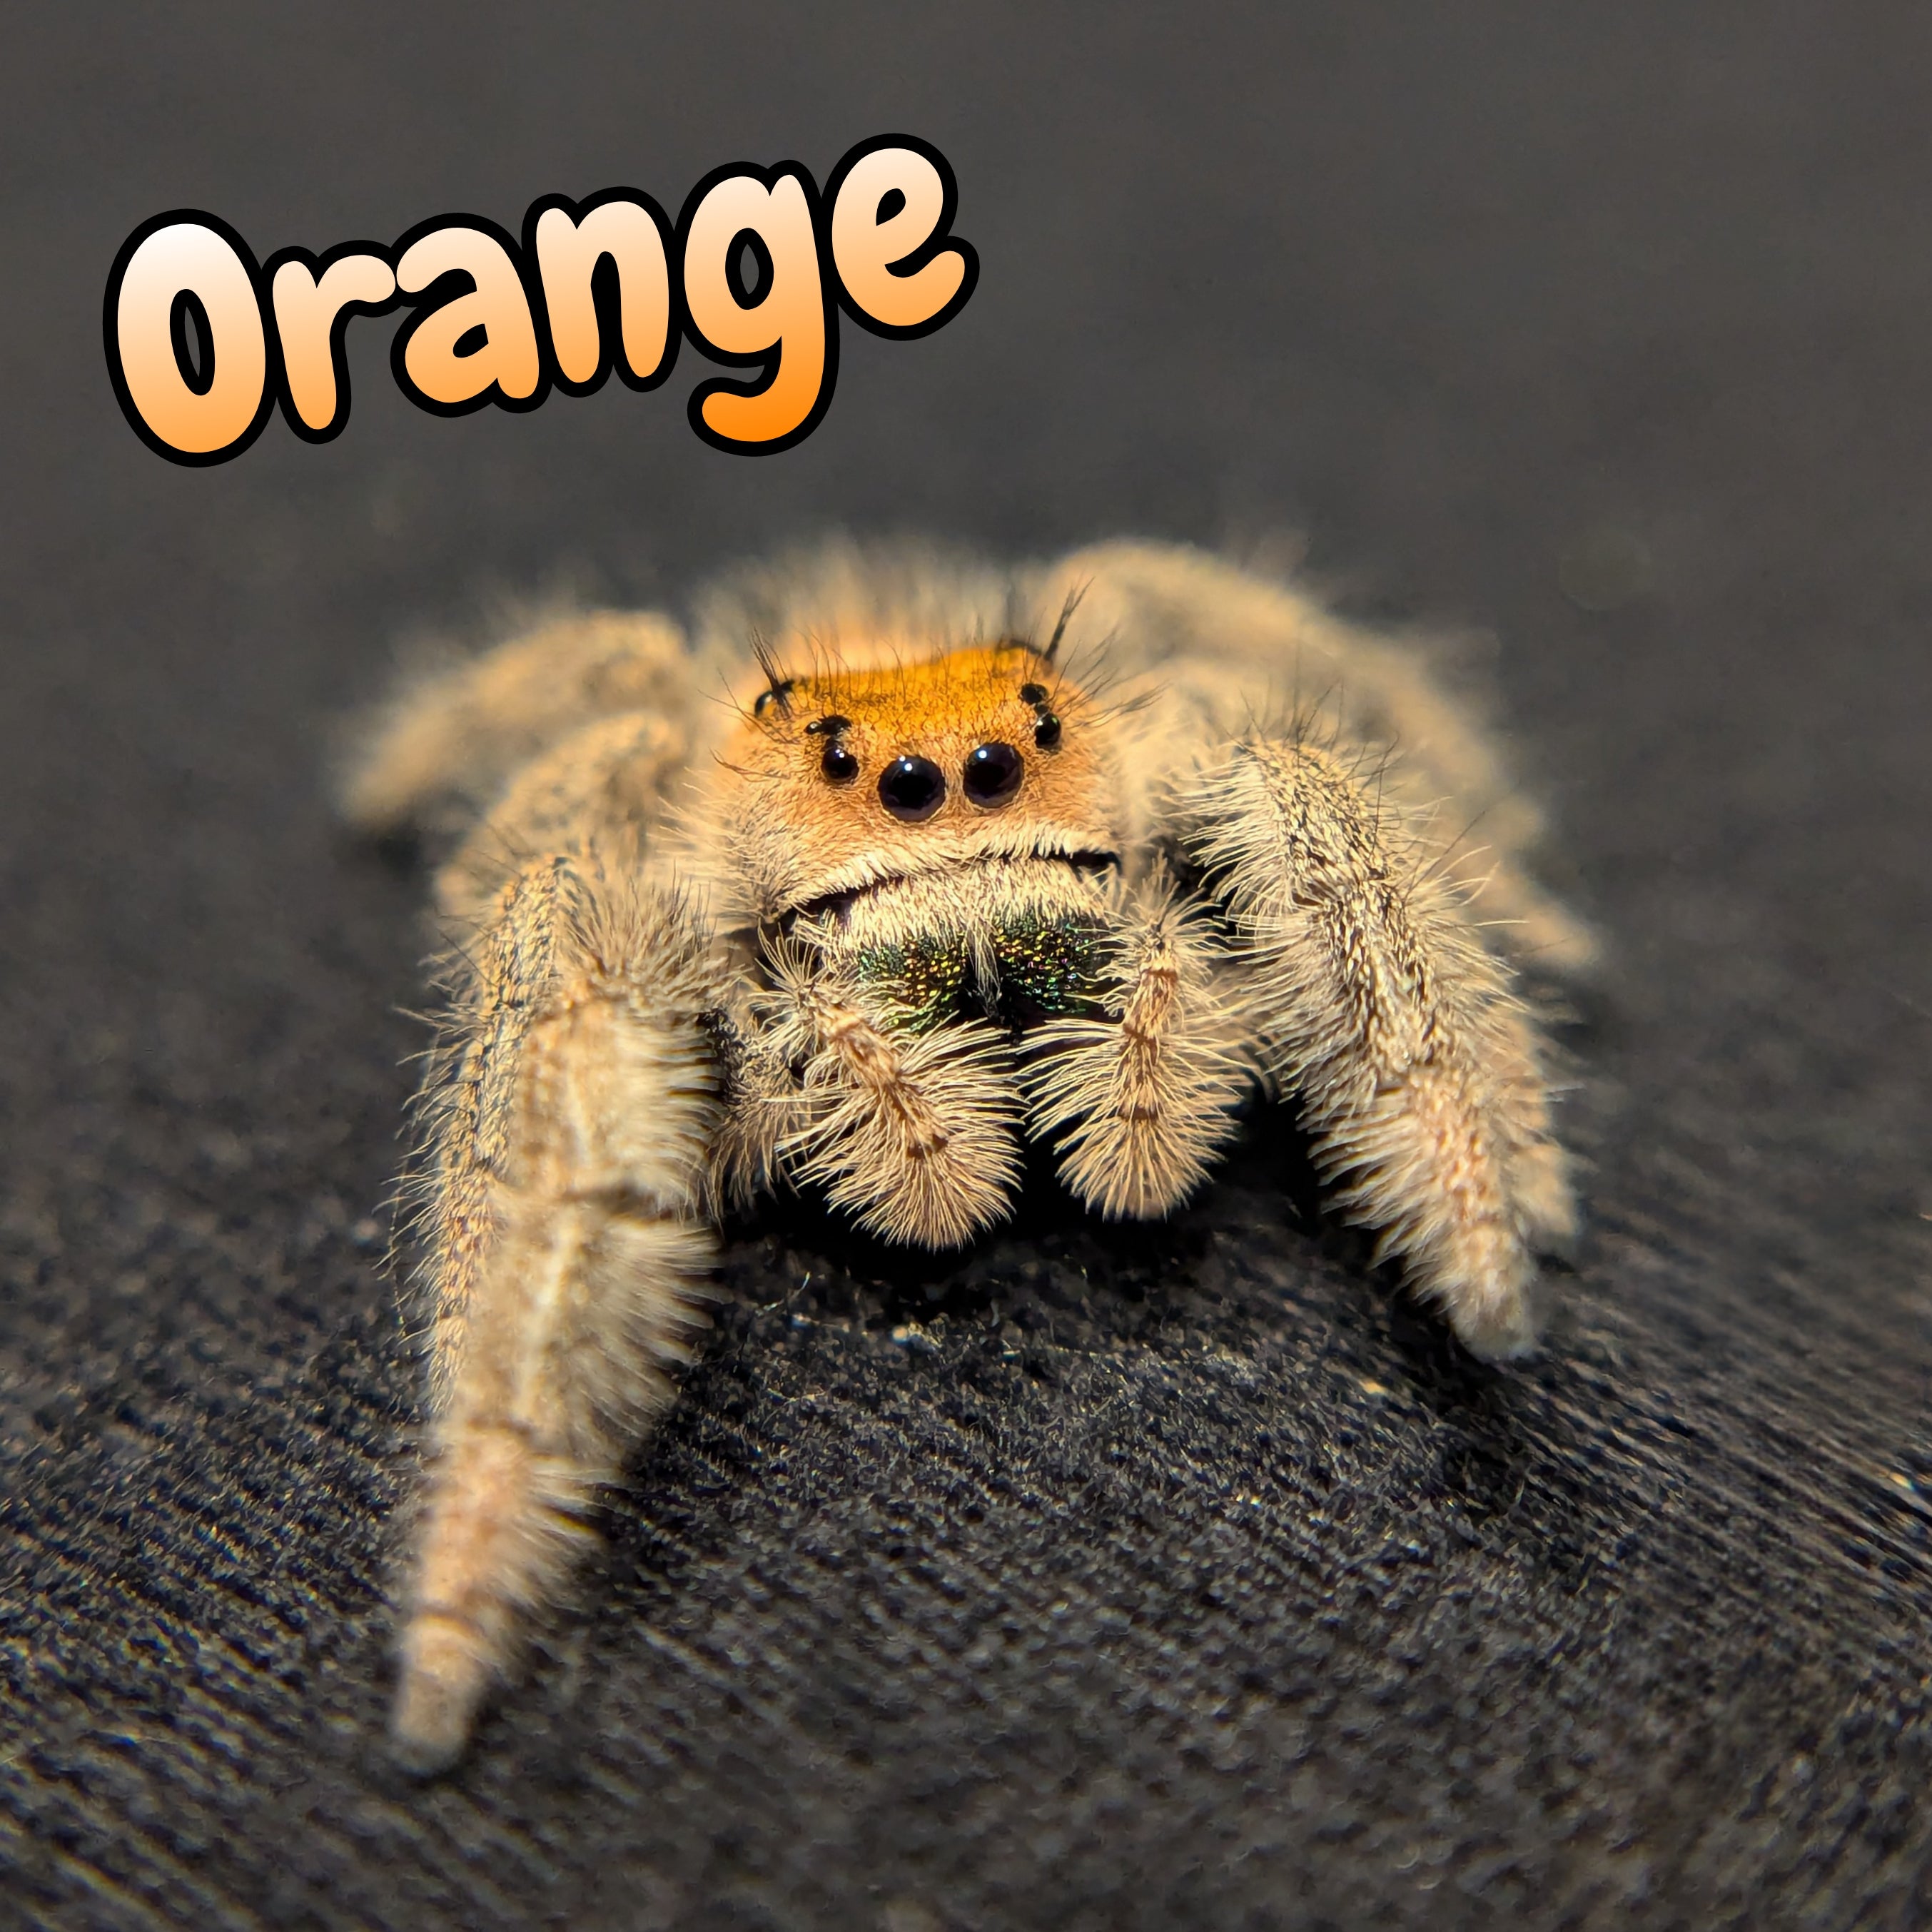 Regal Jumping Spider "Orange"